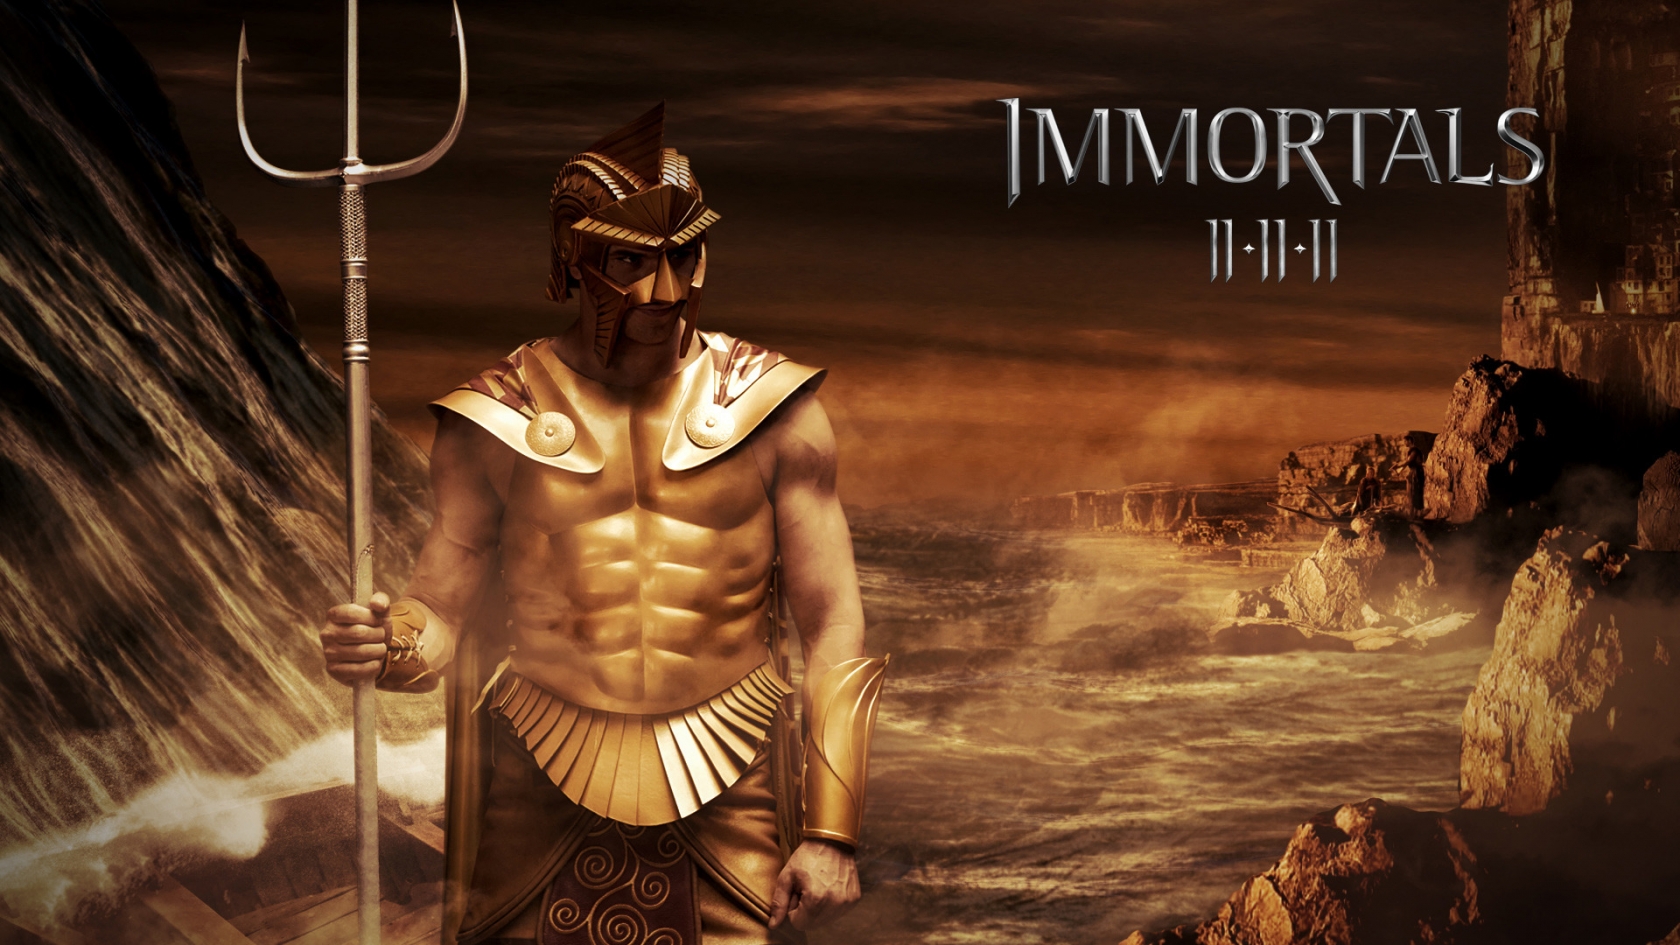 Immortals Movie for 1680 x 945 HDTV resolution